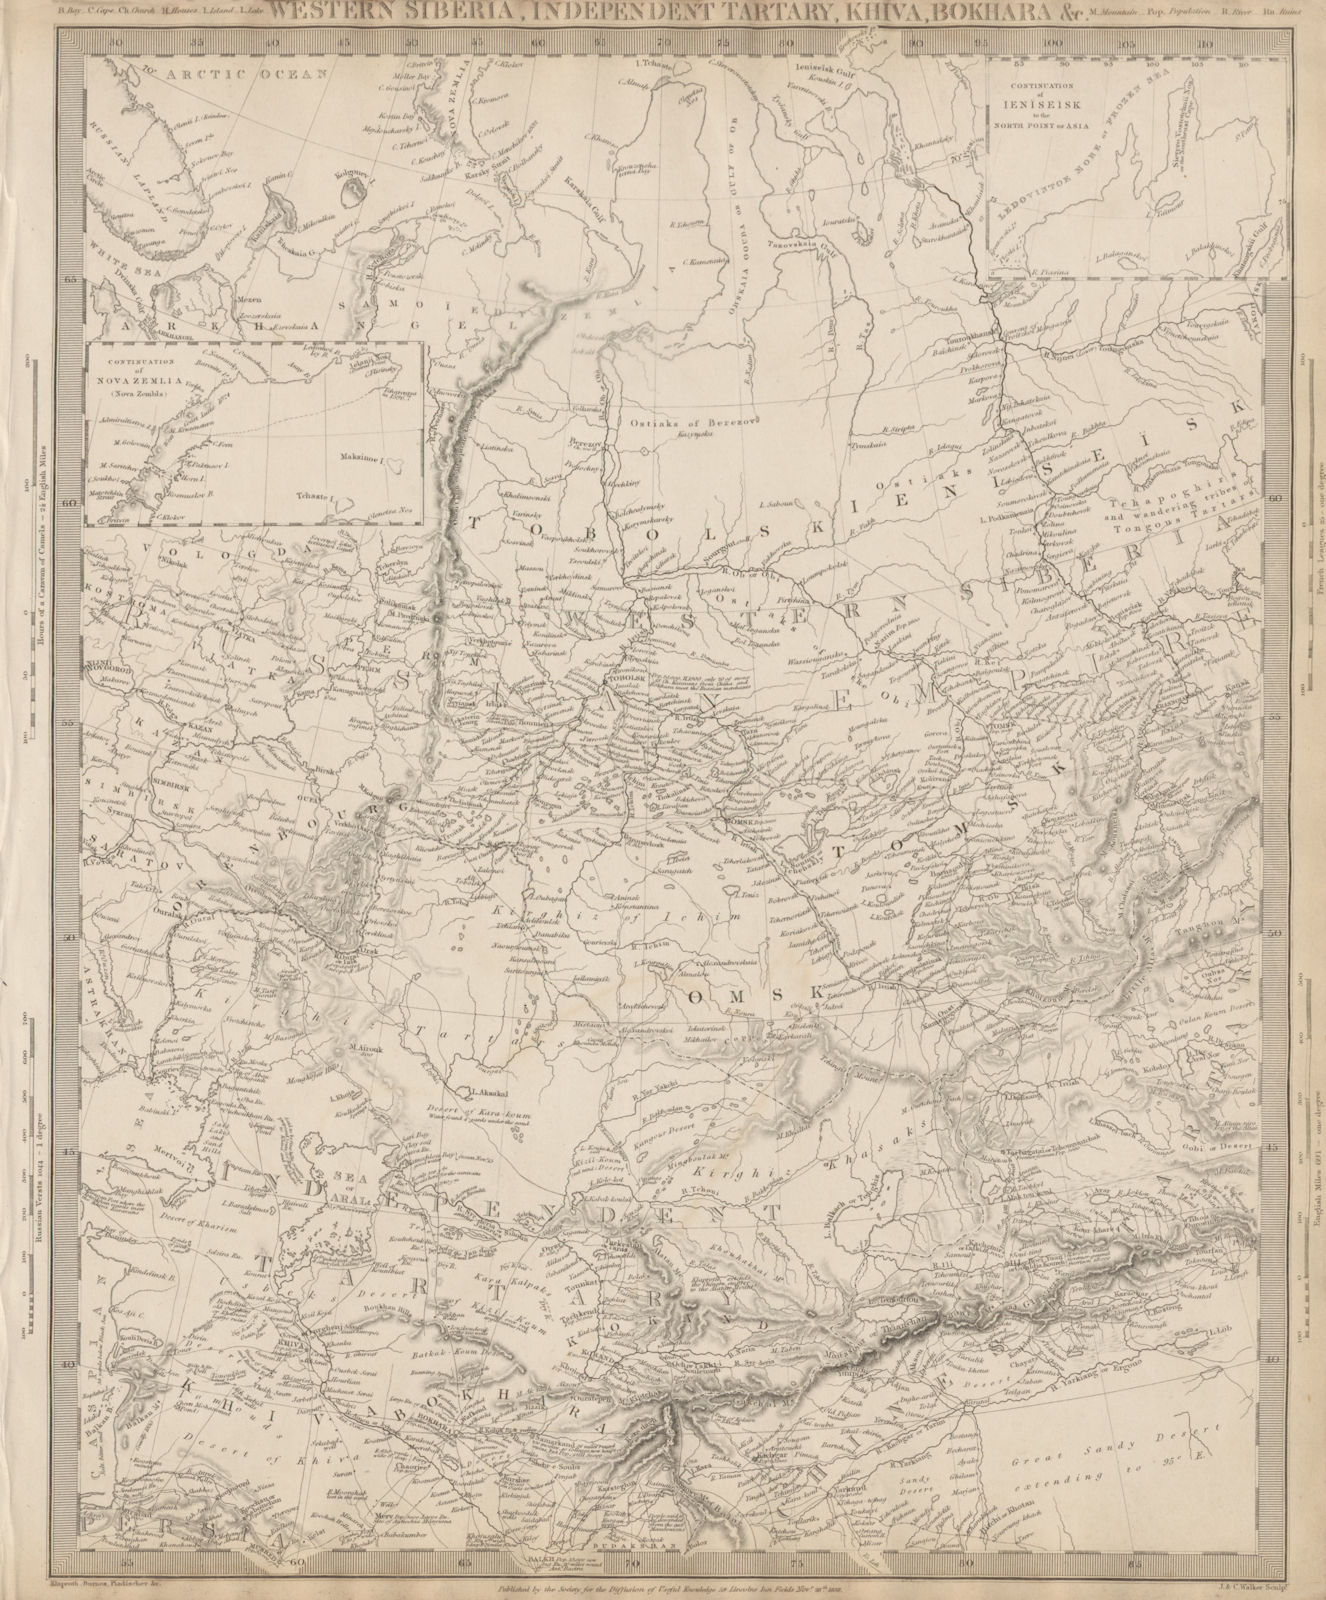 Associate Product CENTRAL ASIA.Western Siberia, Khiva Bukhara. Independent Tartary SDUK 1844 map